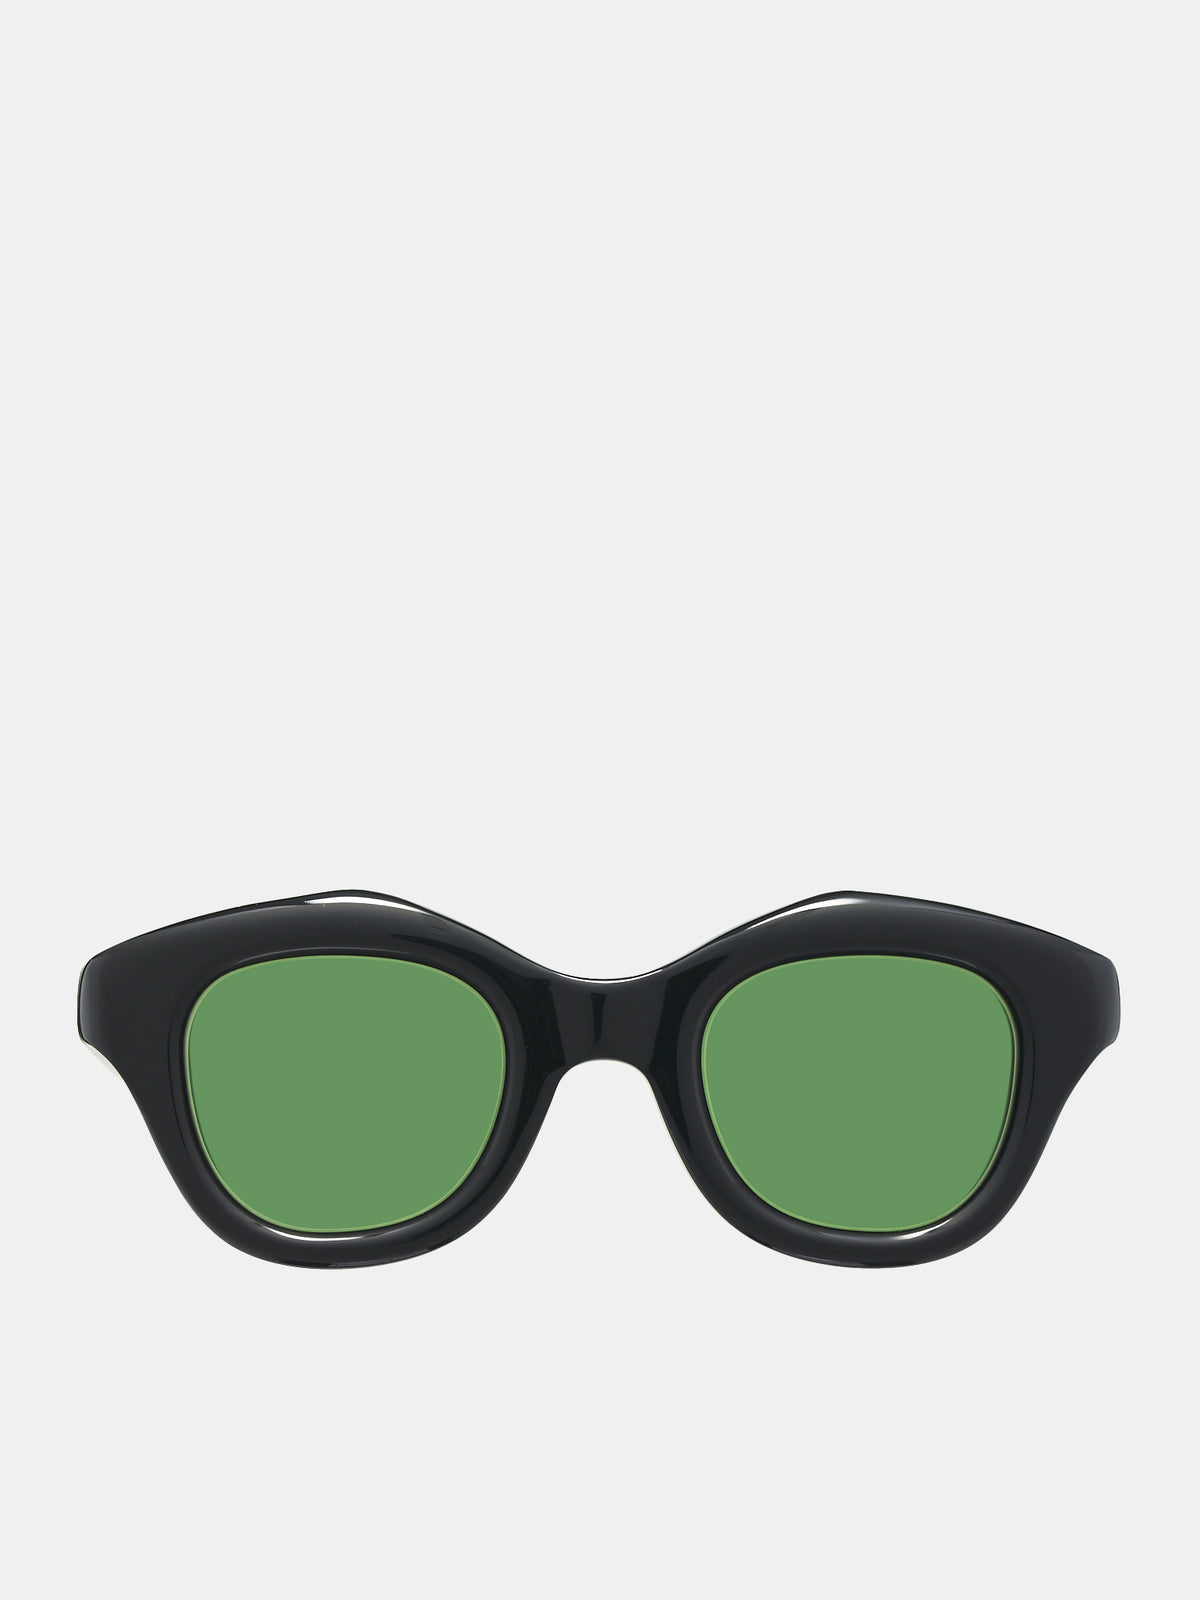 Hook Sunglasses (HOOK-BLACK-GREEN4)